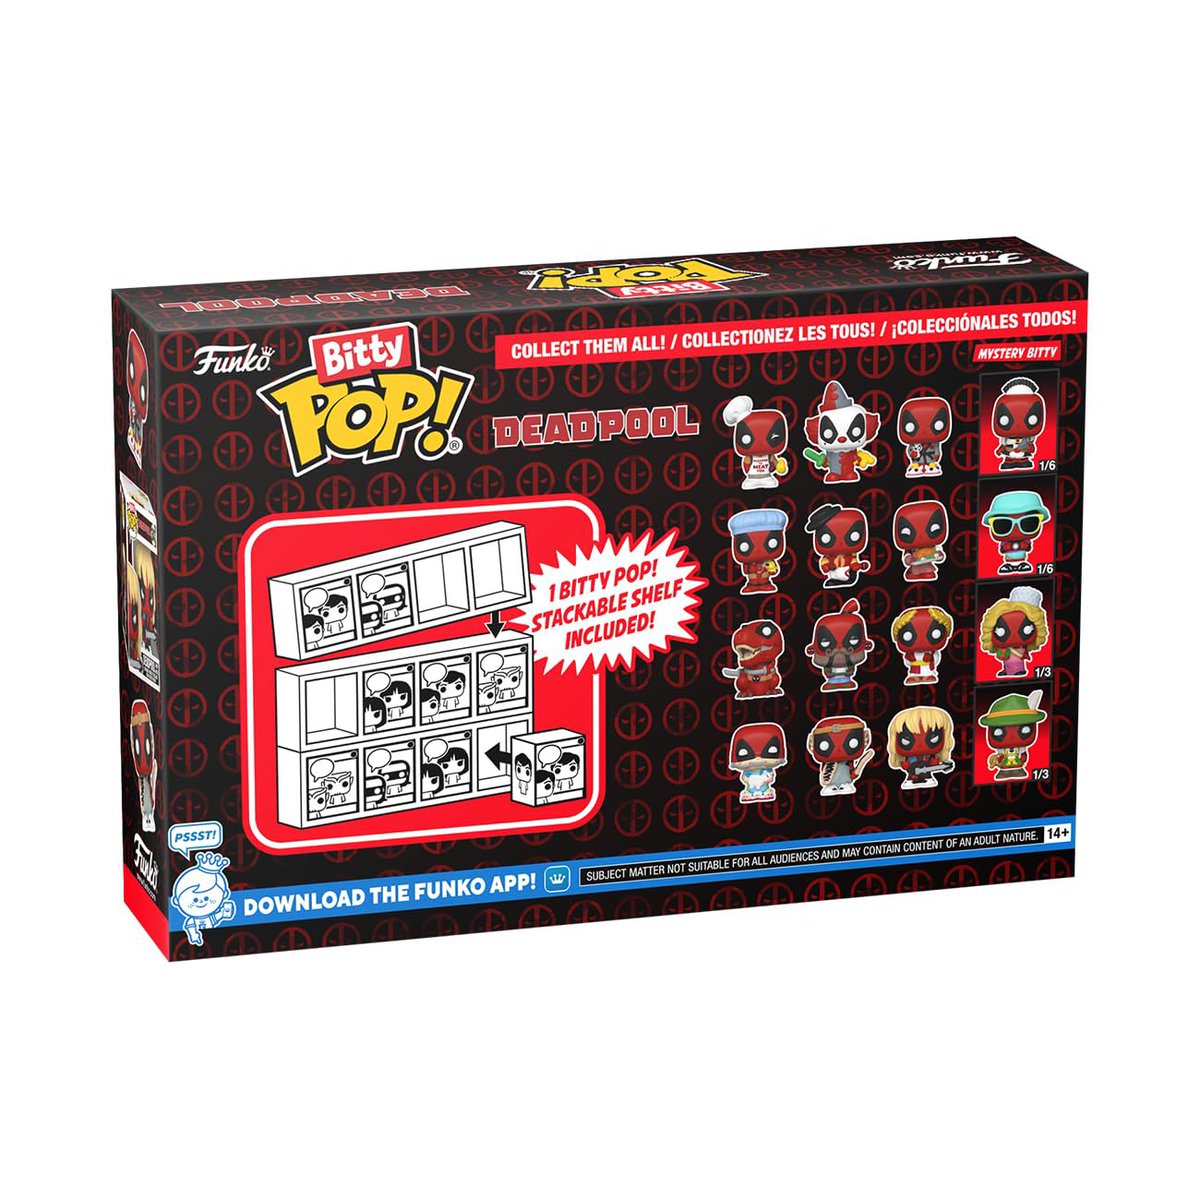 Preorder Now: Deadpool Bitty Pops at Amazon!
#Ad #Deadpool #Marvel
.
amzn.to/3V178ik
.
In order: BBQ, Bathtime, Dinopool, & Sleepover.
#Funko #FunkoPop #FunkoPopVinyl #Pop #PopVinyl #Collectibles #Collectible #FunkoCollector #FunkoPops #Collector #Toy #Toys #DisTrackers